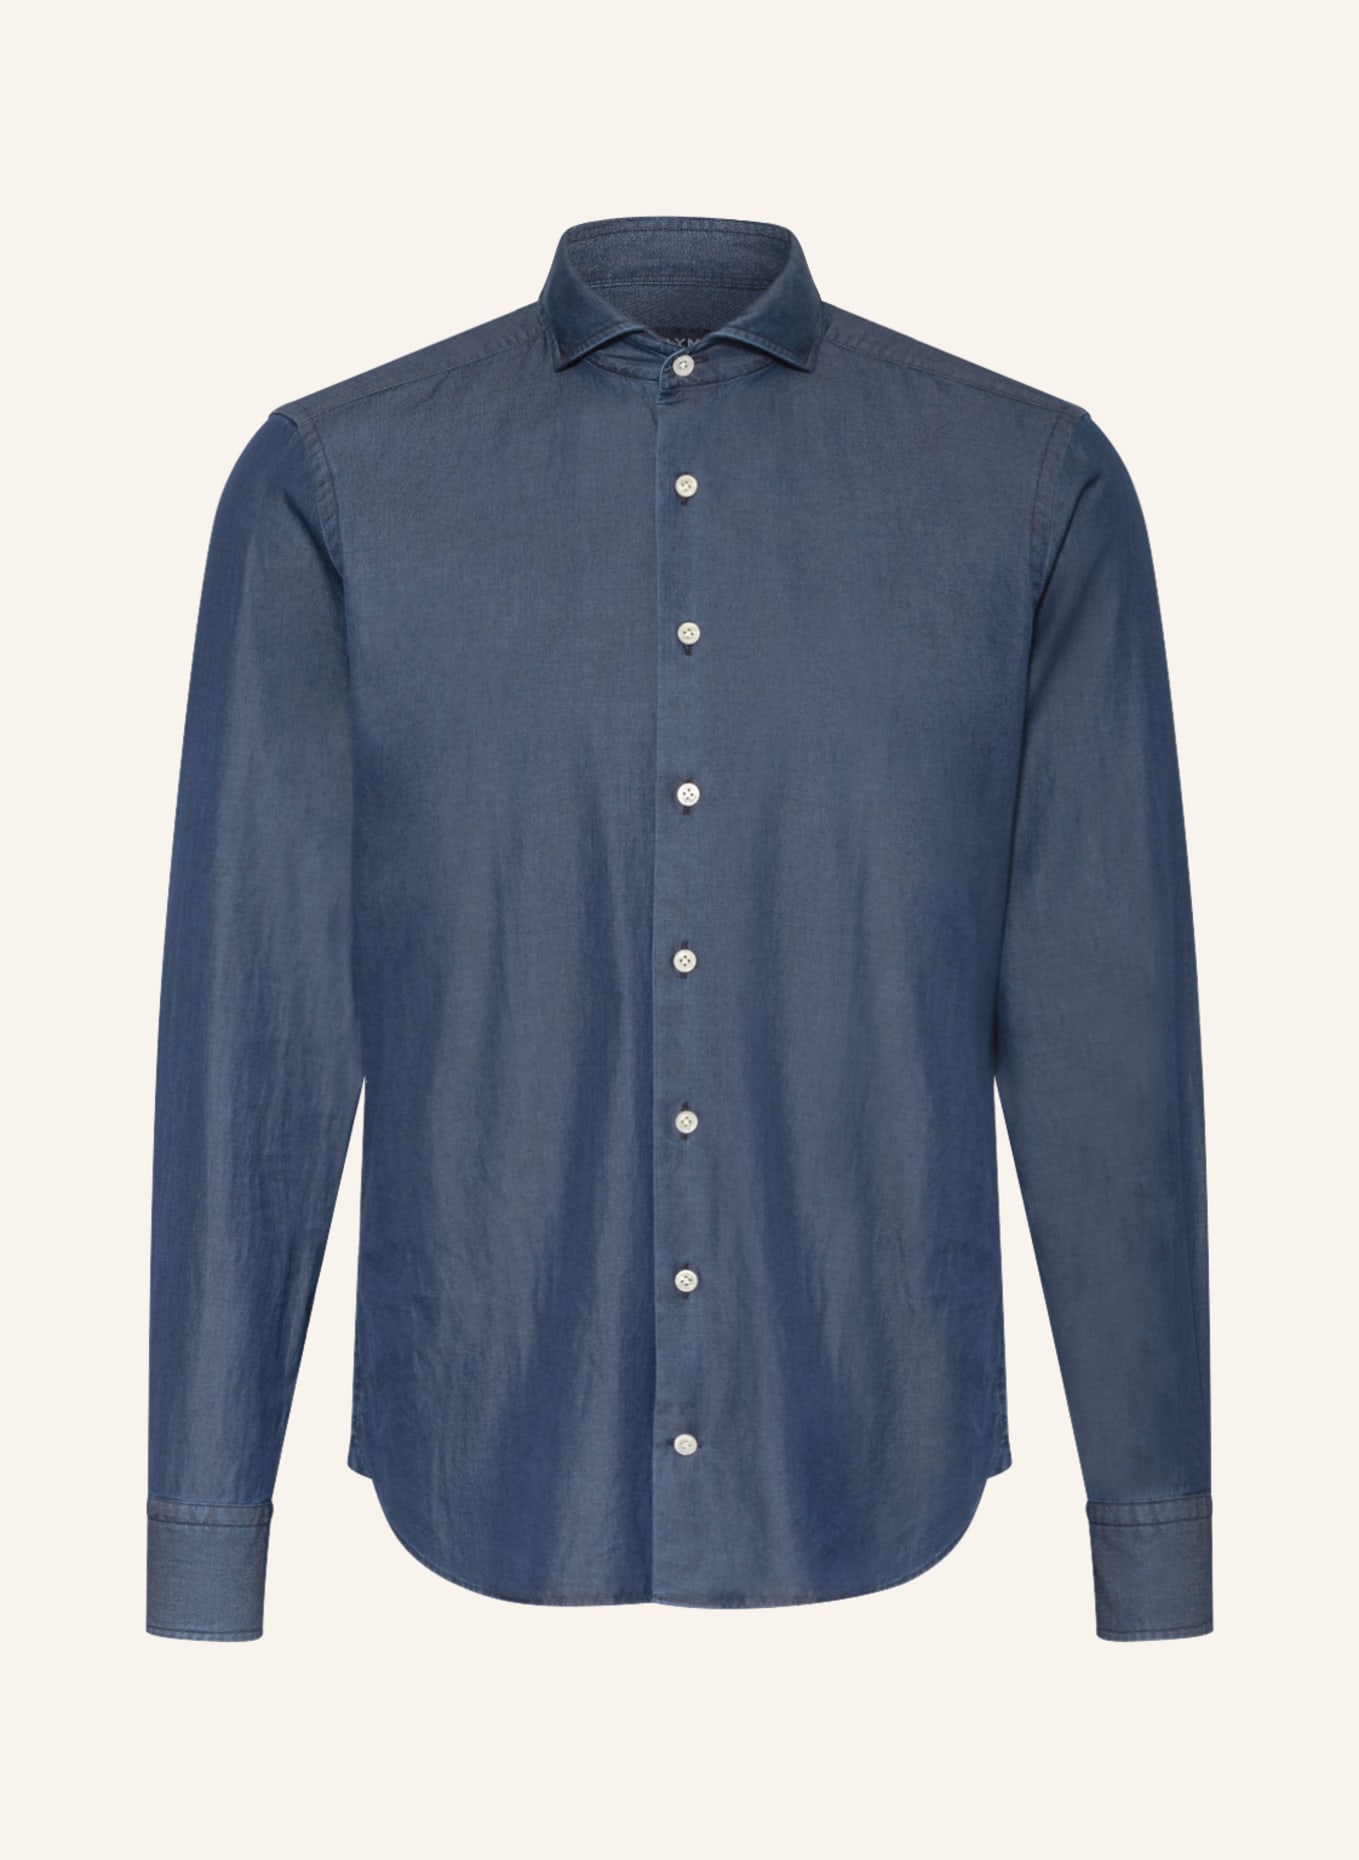 OLYMP SIGNATURE Hemd tailored fit, Farbe: DUNKELBLAU (Bild 1)